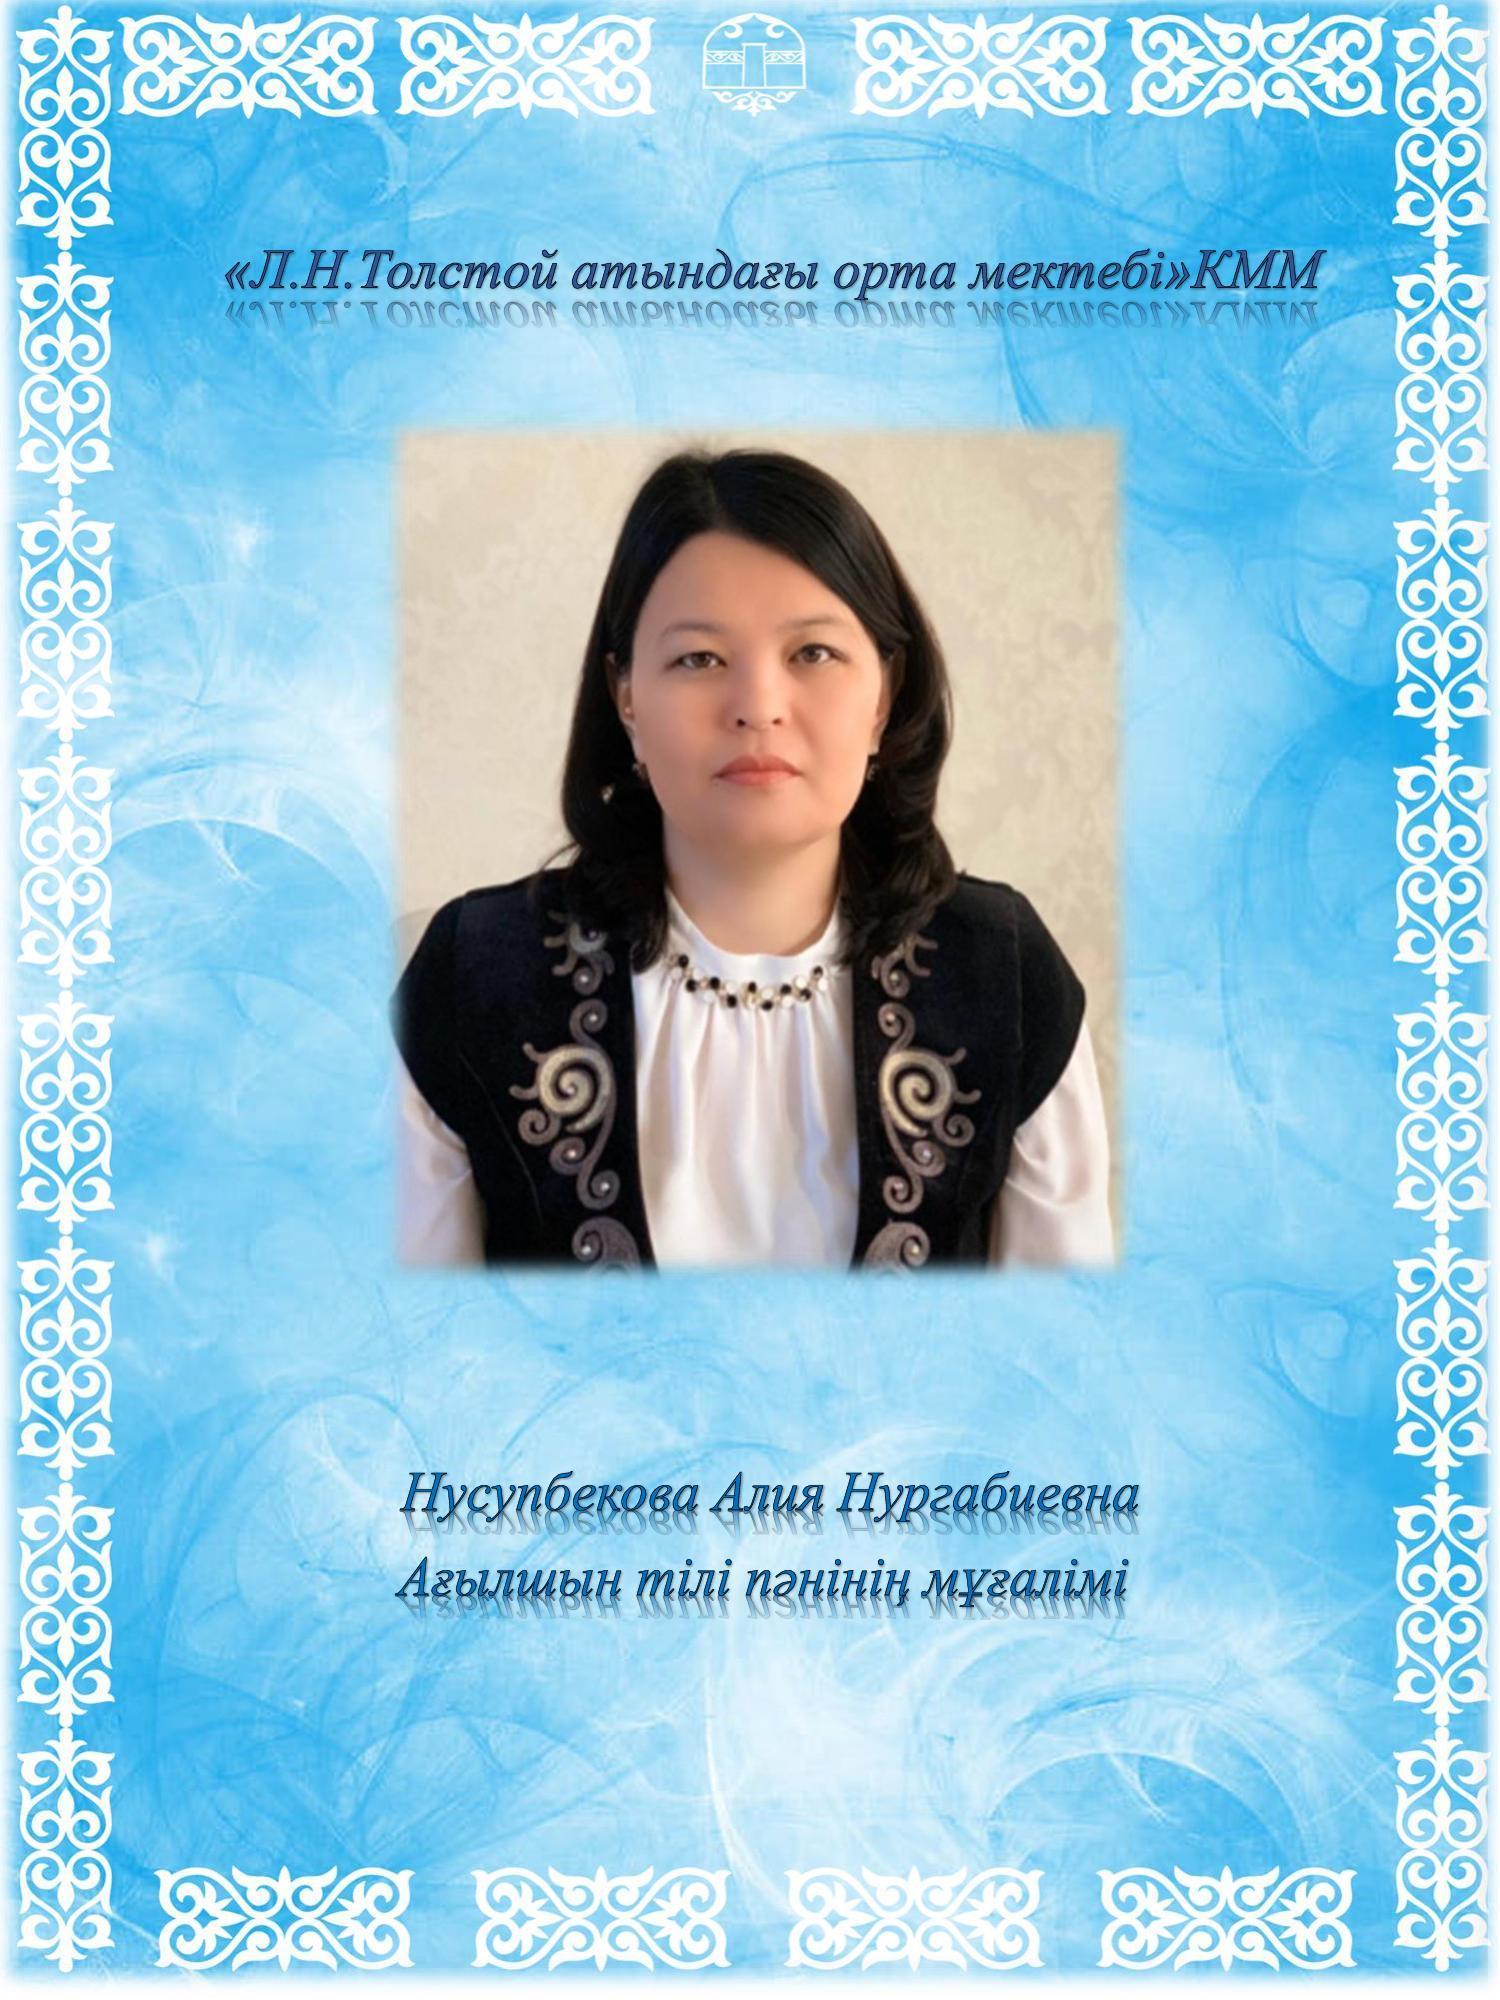 Нусупбекова Алия Нургабиевна